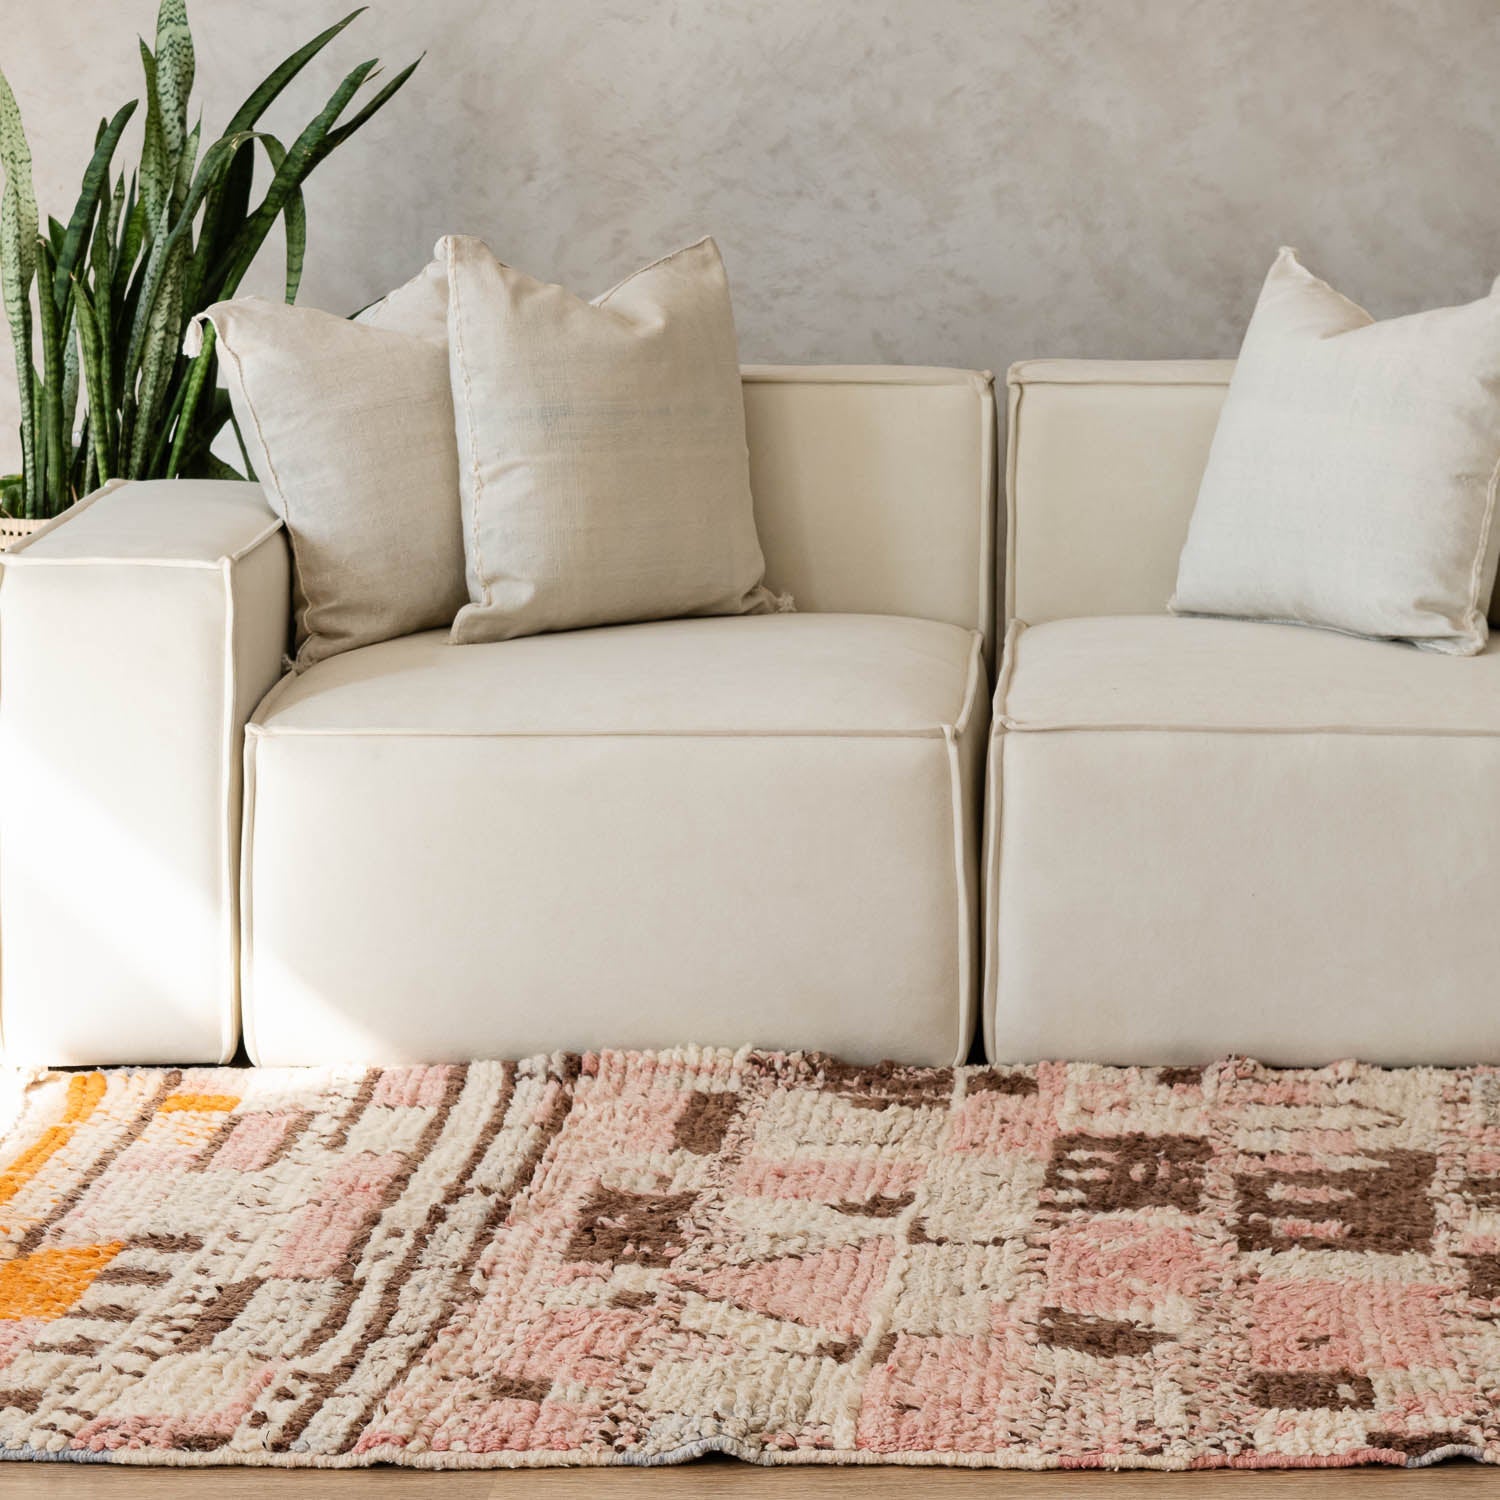 Ouafa - Vintage Moroccan rug